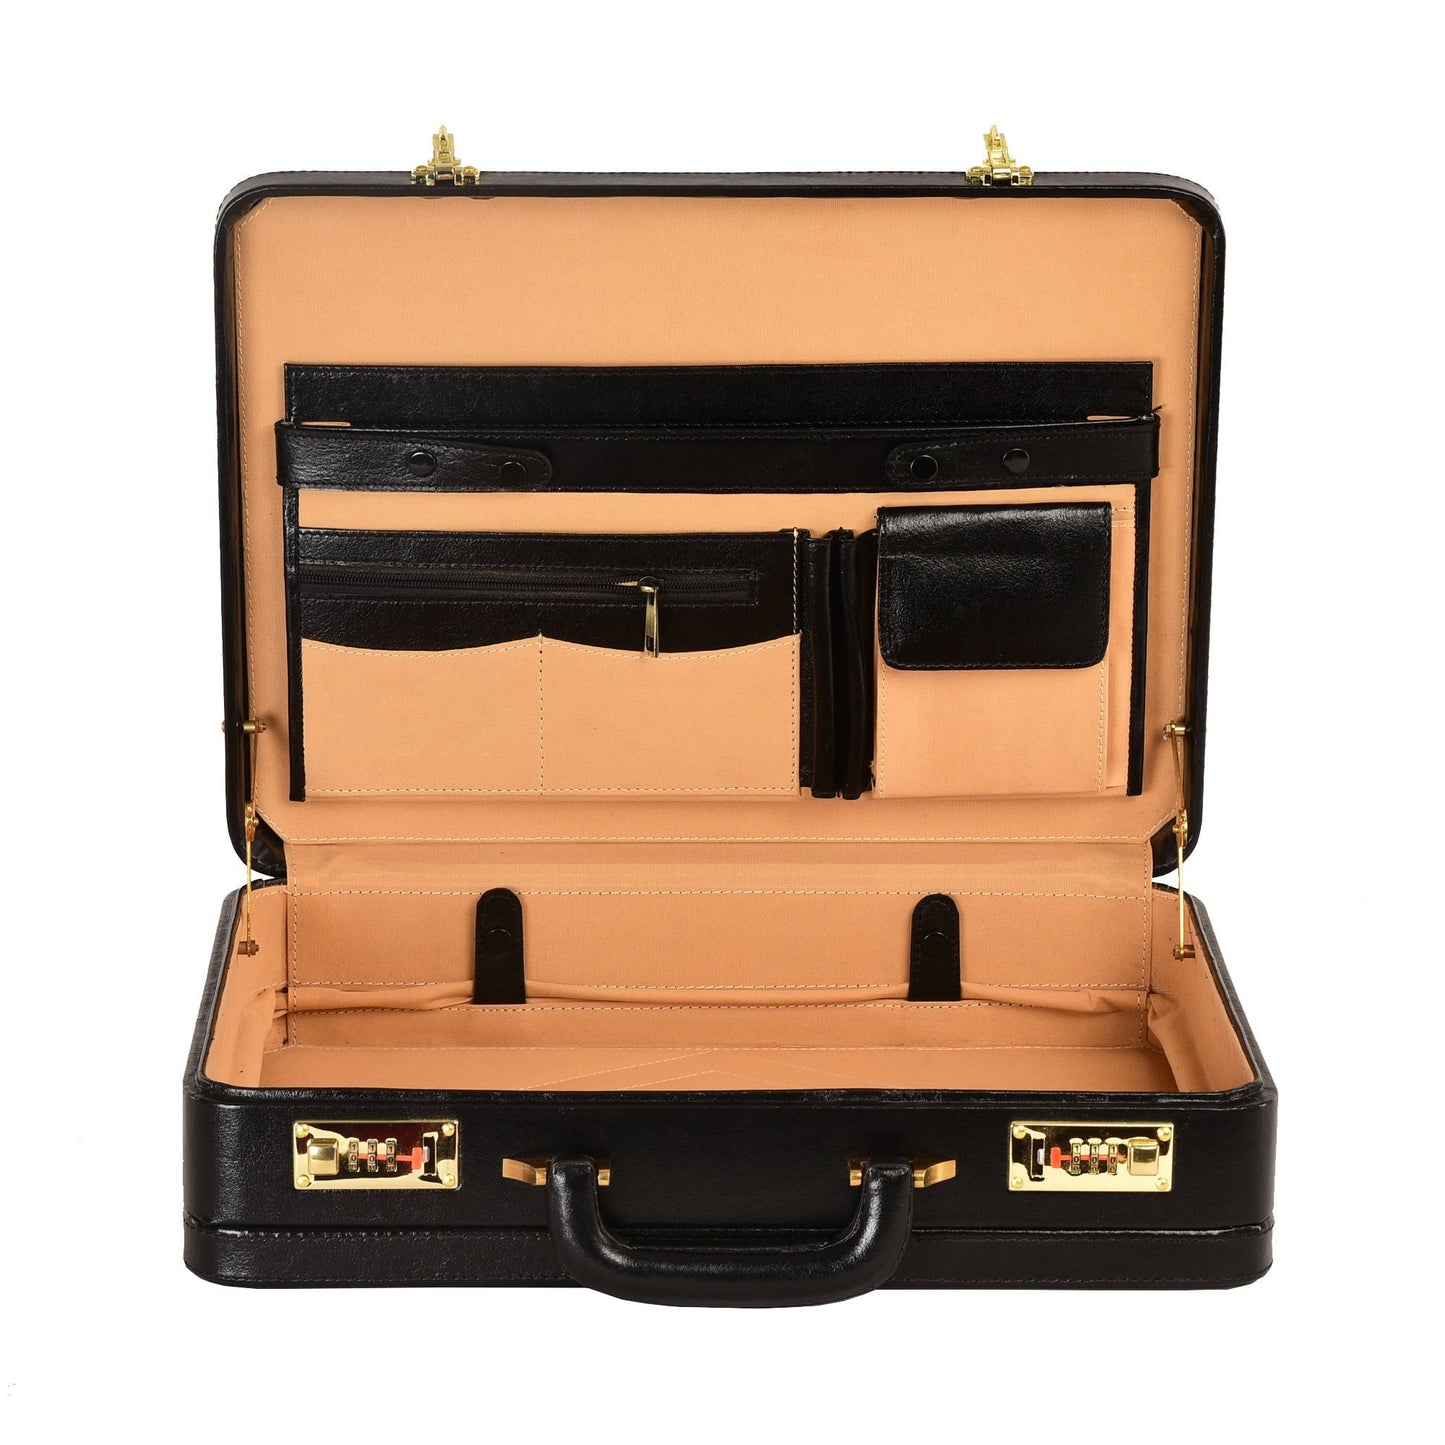 Expandable Leather Briefcase for Mens Leather Attache Handbag for Doctors Business Handbag Black Leather Briefcase Office Briefcase